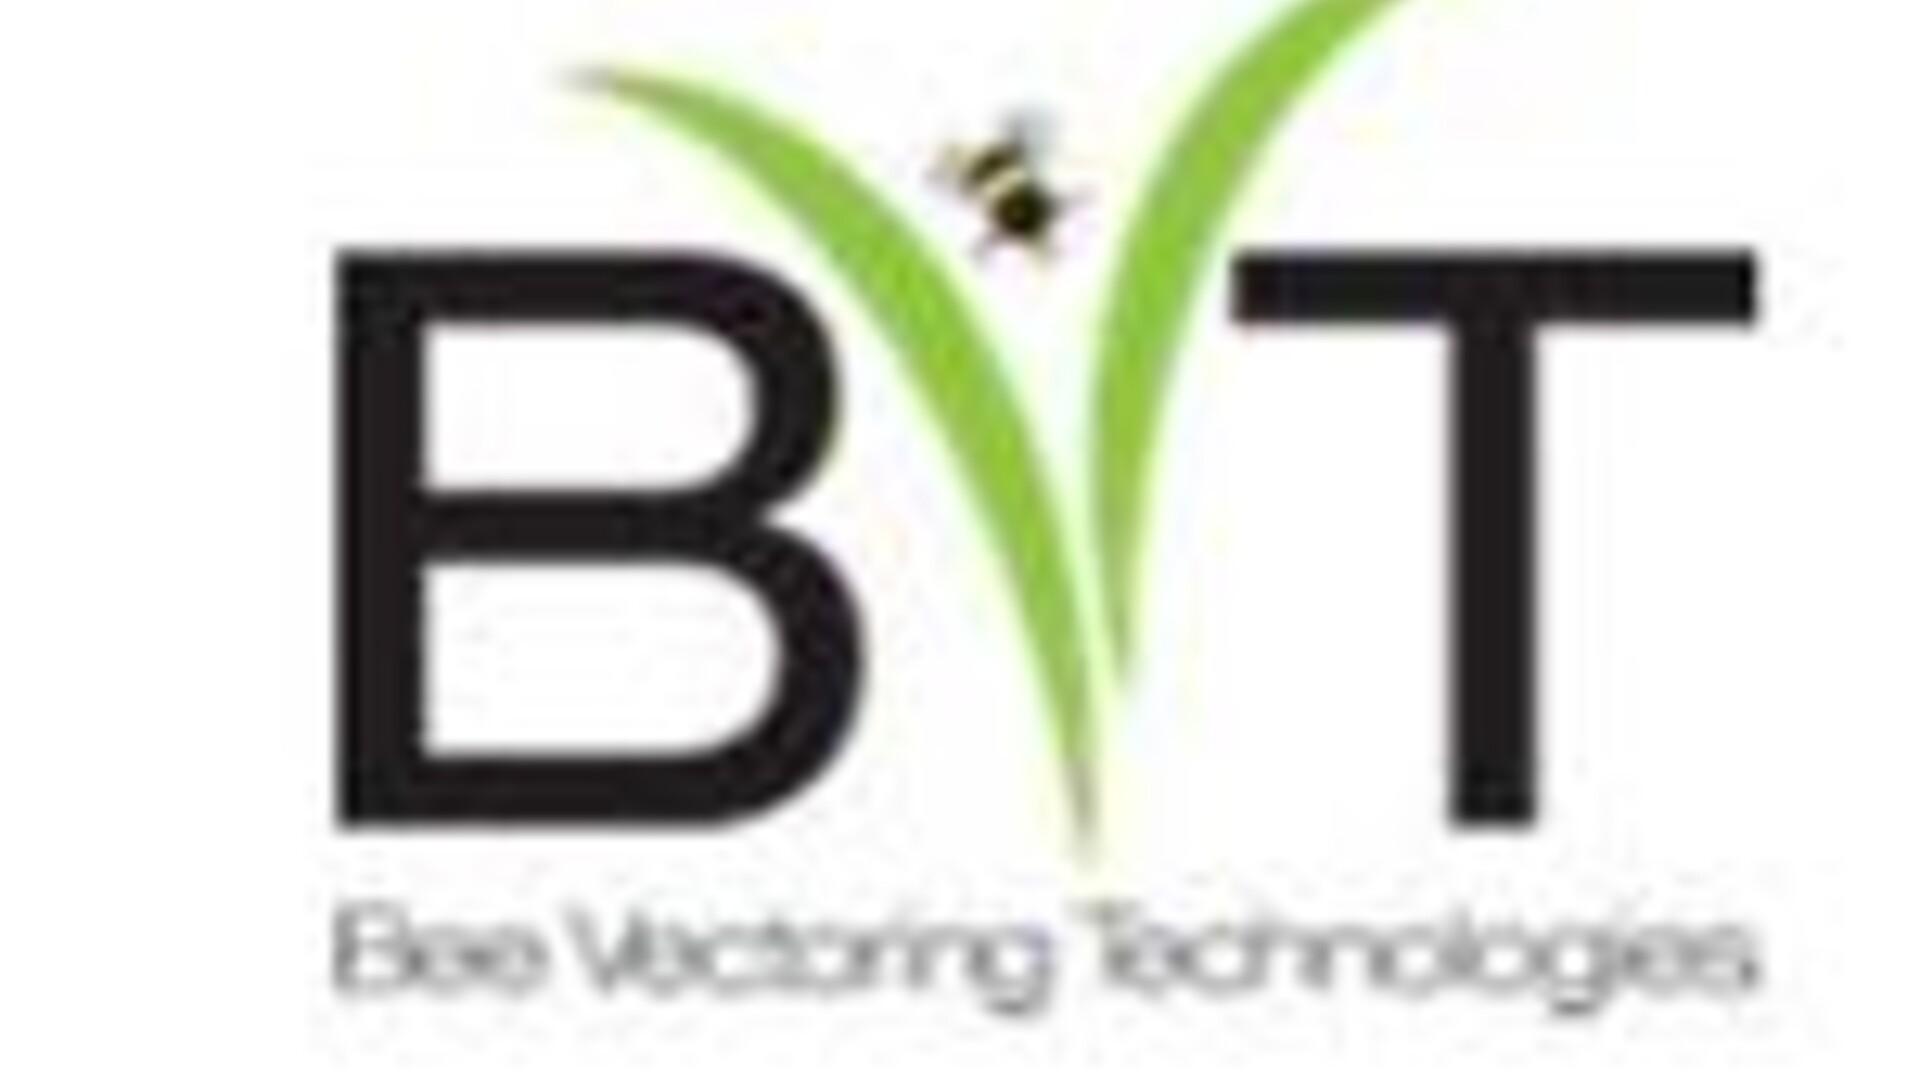 Bee Vectoring Technologies (BVT) Pt 2